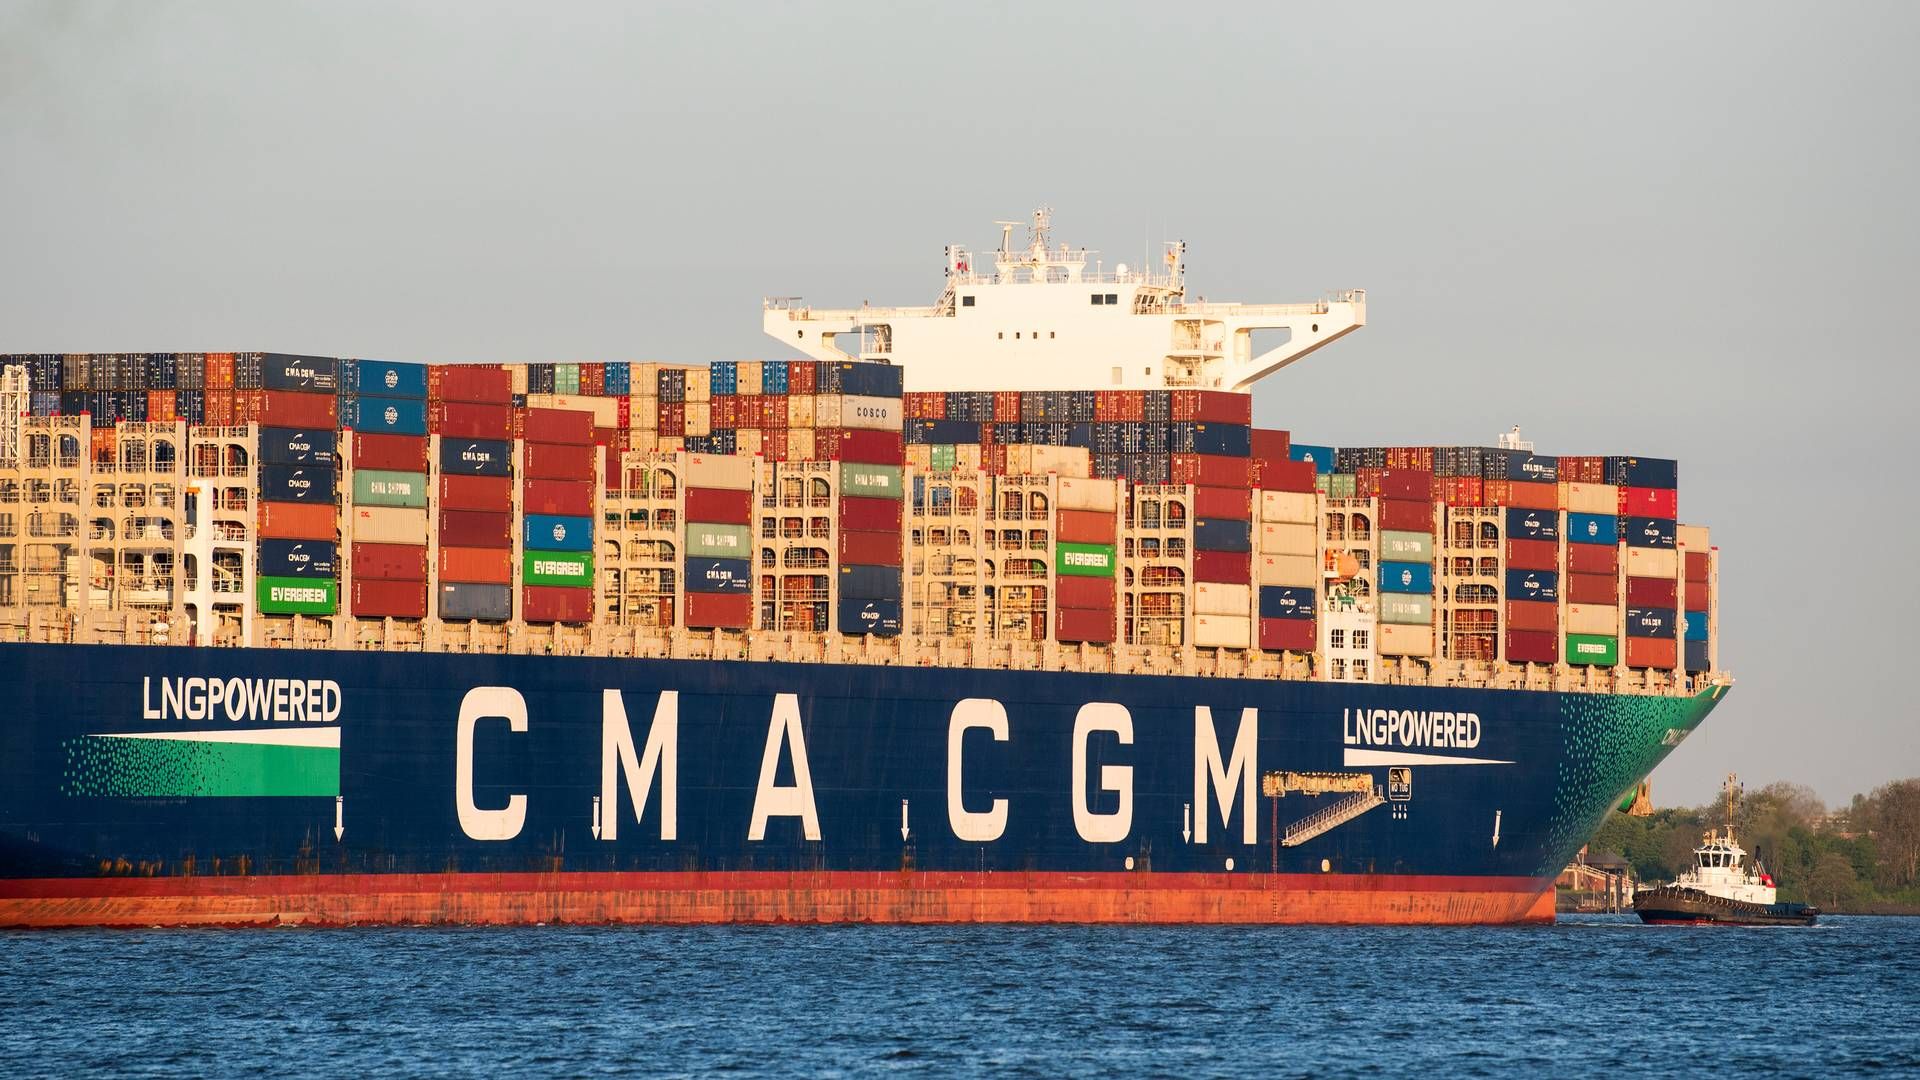 Et CMA CGM-containerskib forlader havneterminal - er ikke det aktuelle skib CMA CGM Tage.